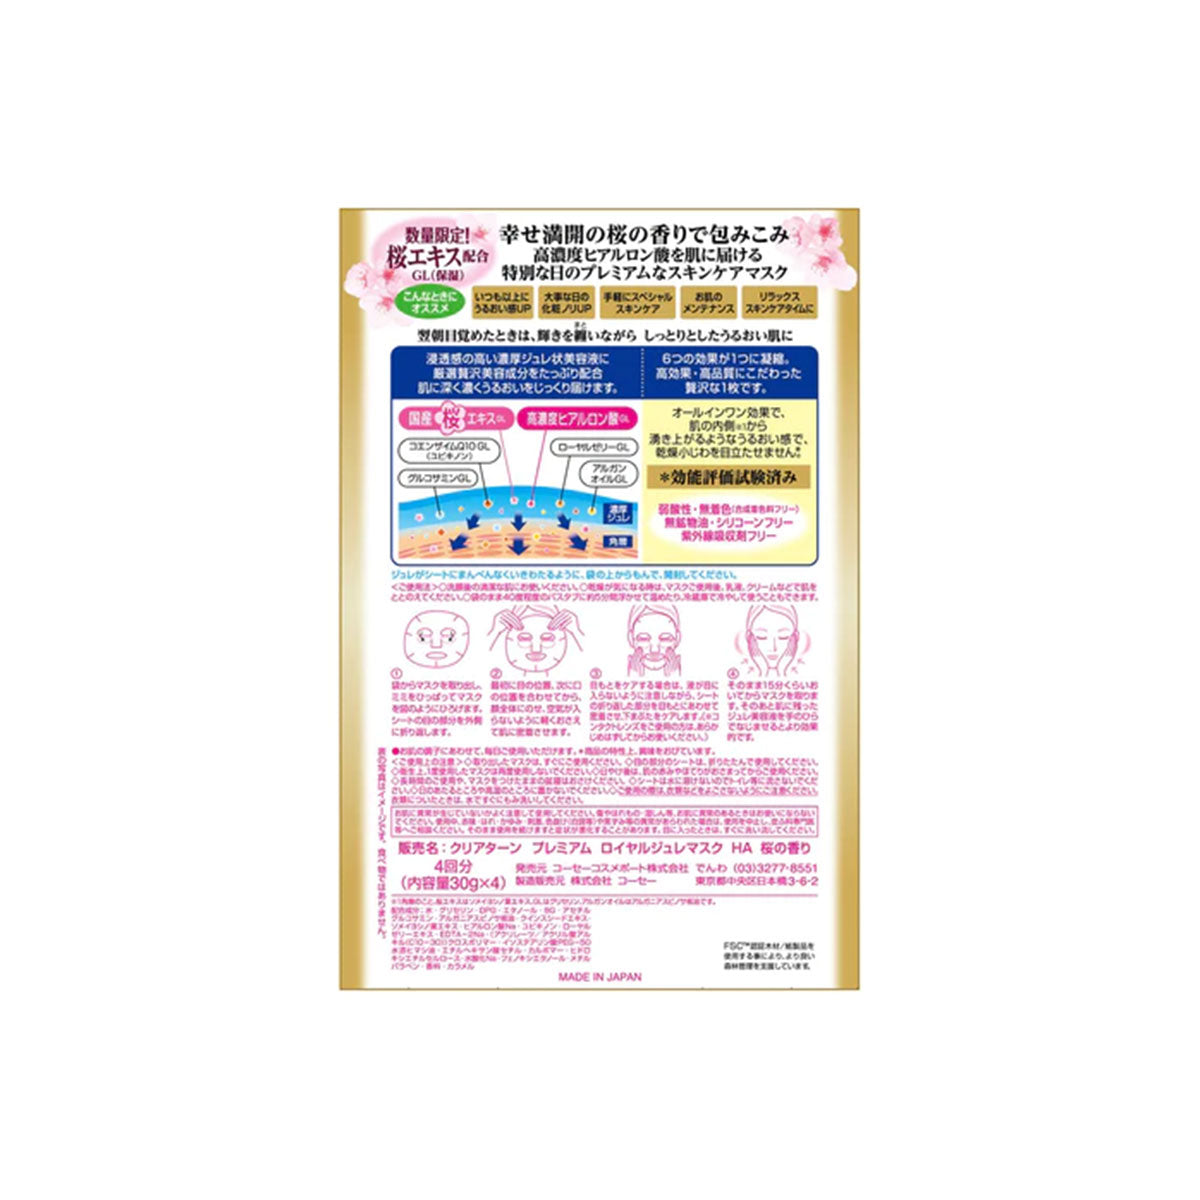 Clear Turn Premium Royal Jelly Mask Hyaluronic Acid #Sakura 4pcs